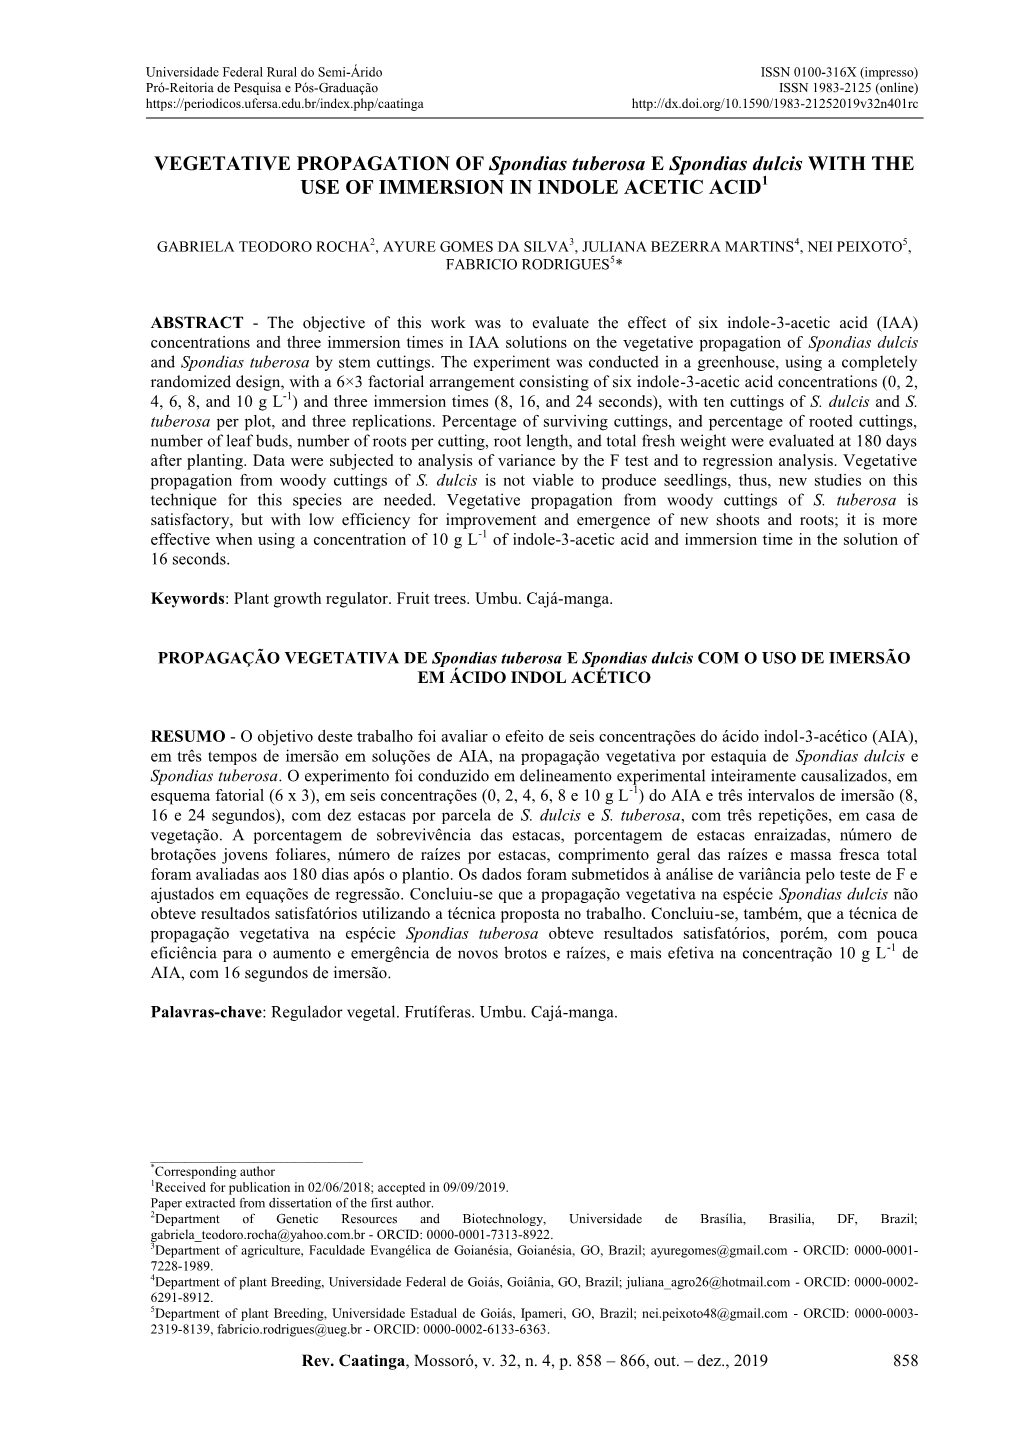 VEGETATIVE PROPAGATION of Spondias Tuberosa E Spondias Dulcis with the USE of IMMERSION in INDOLE ACETIC ACID1